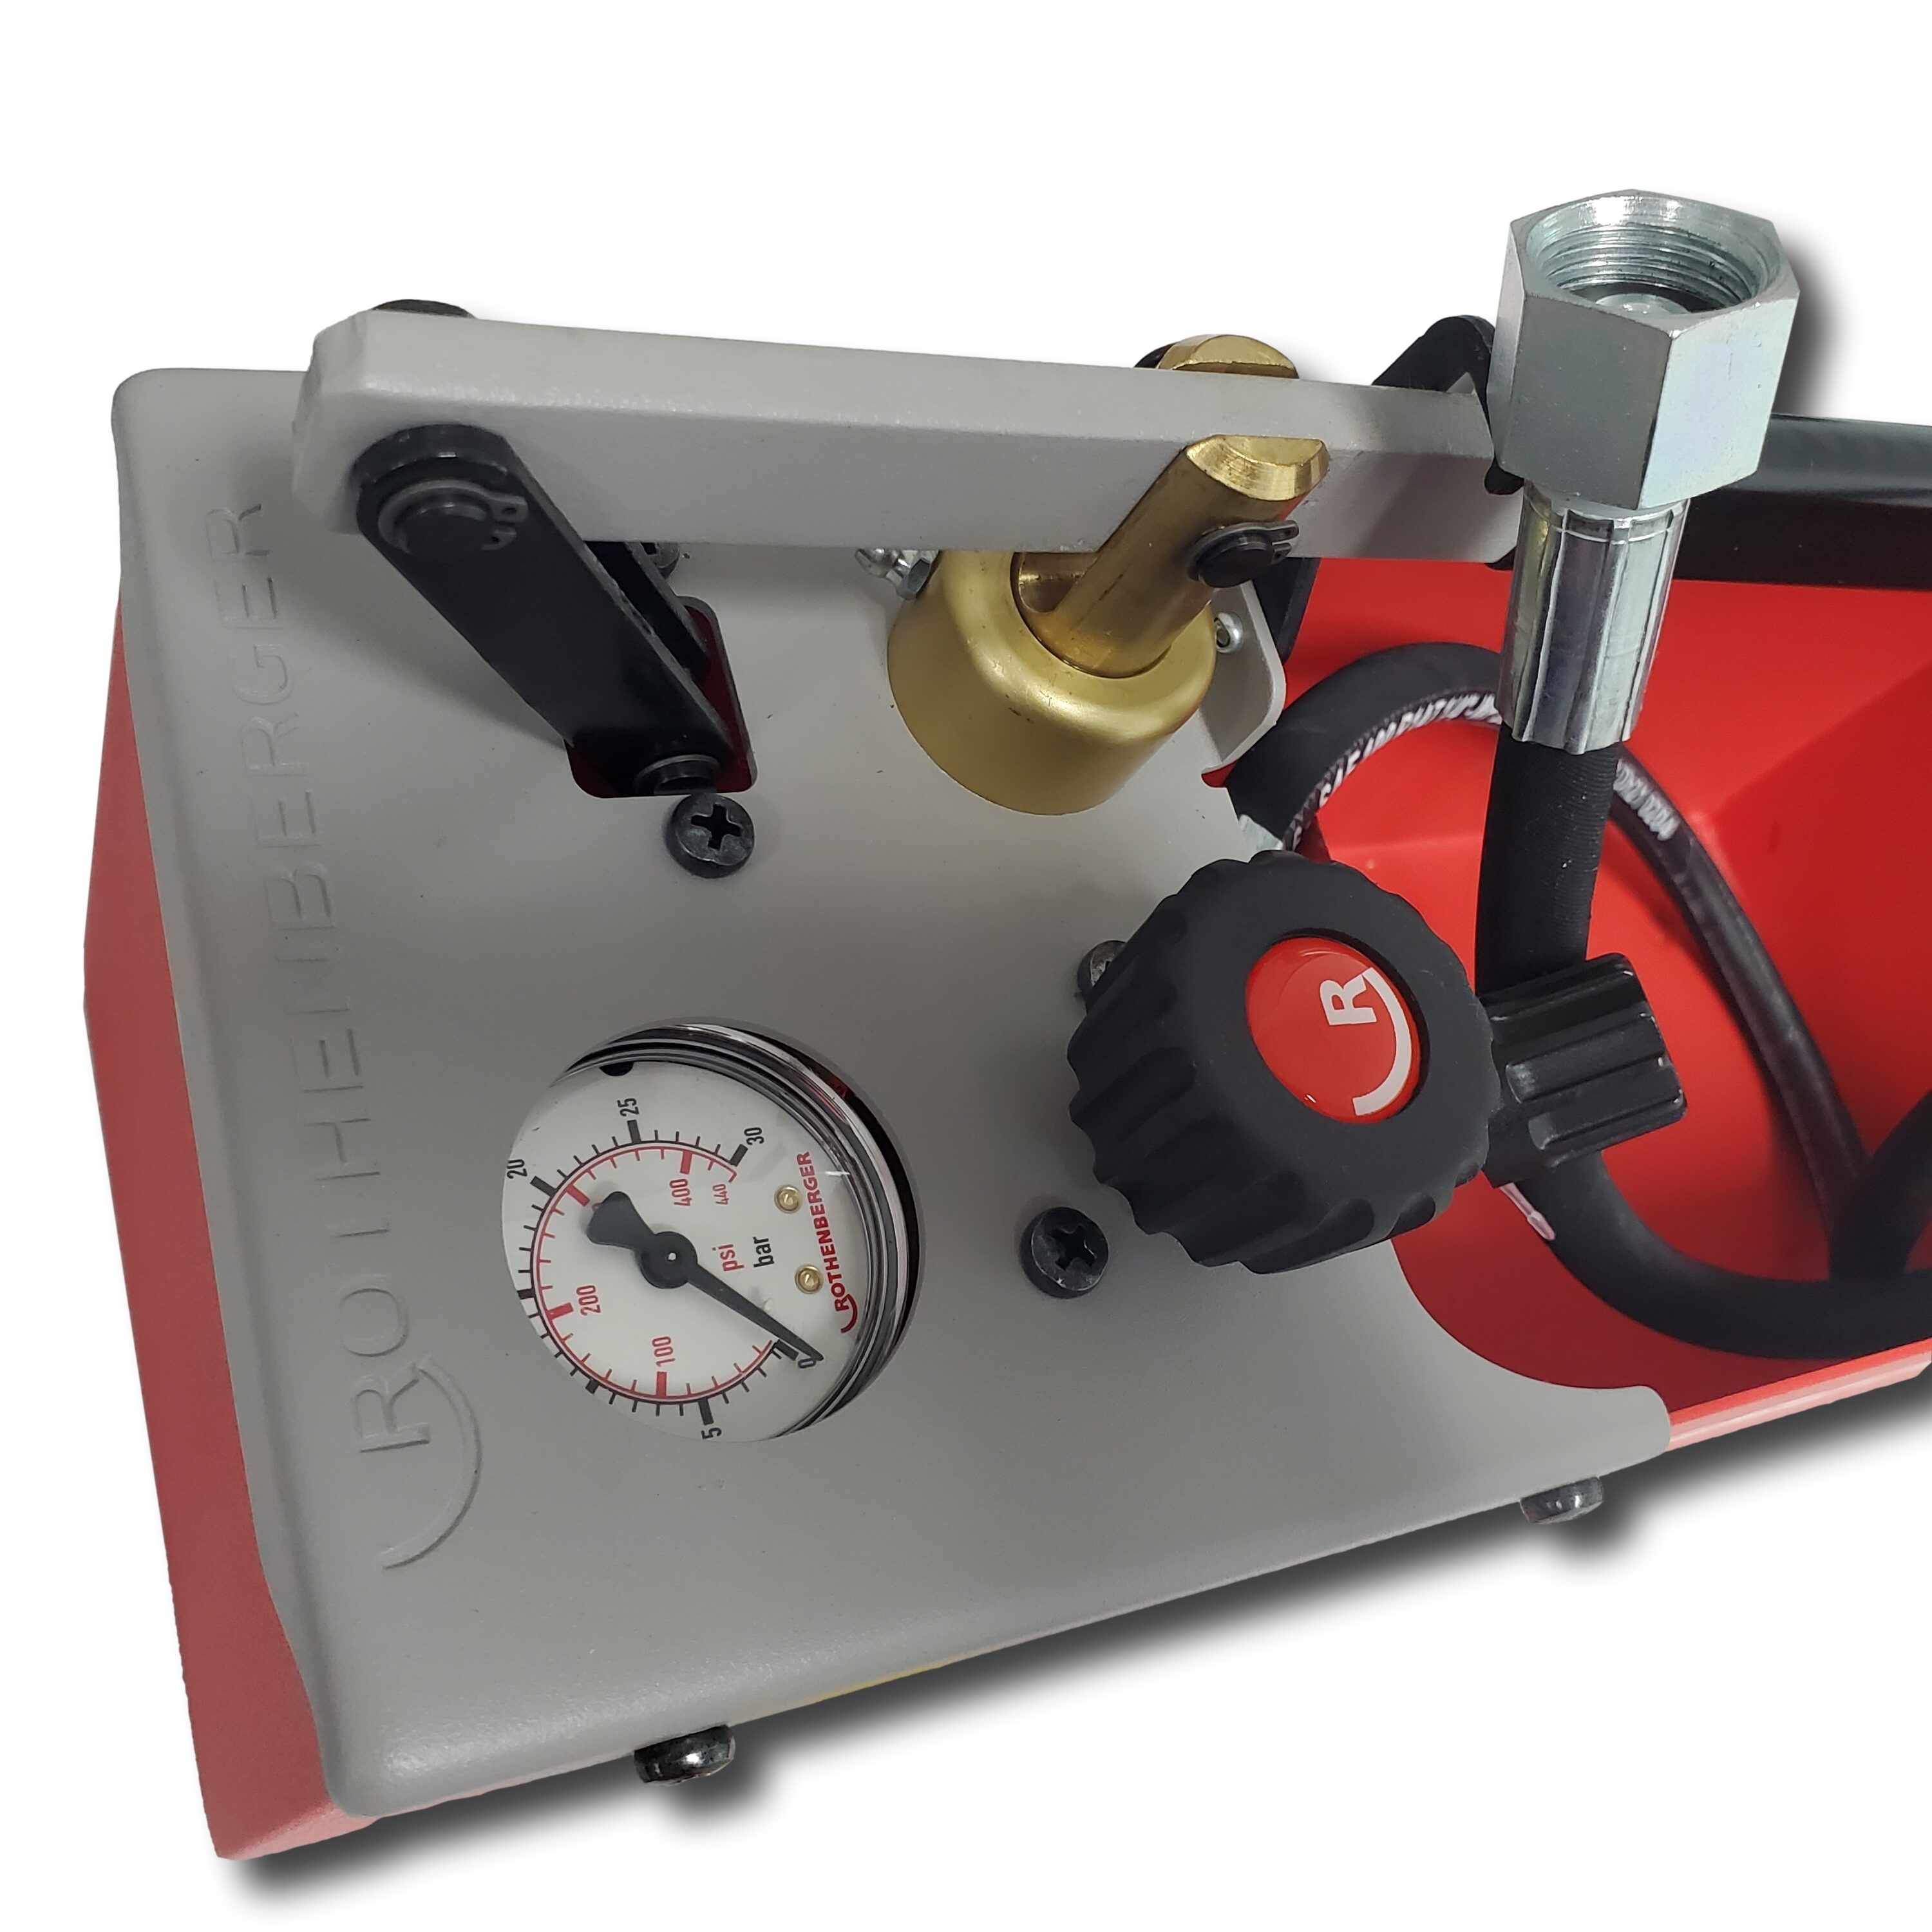 Rothenberger 60200 RP50-S Test Pump, Max Pressure 60 bar/860 psi